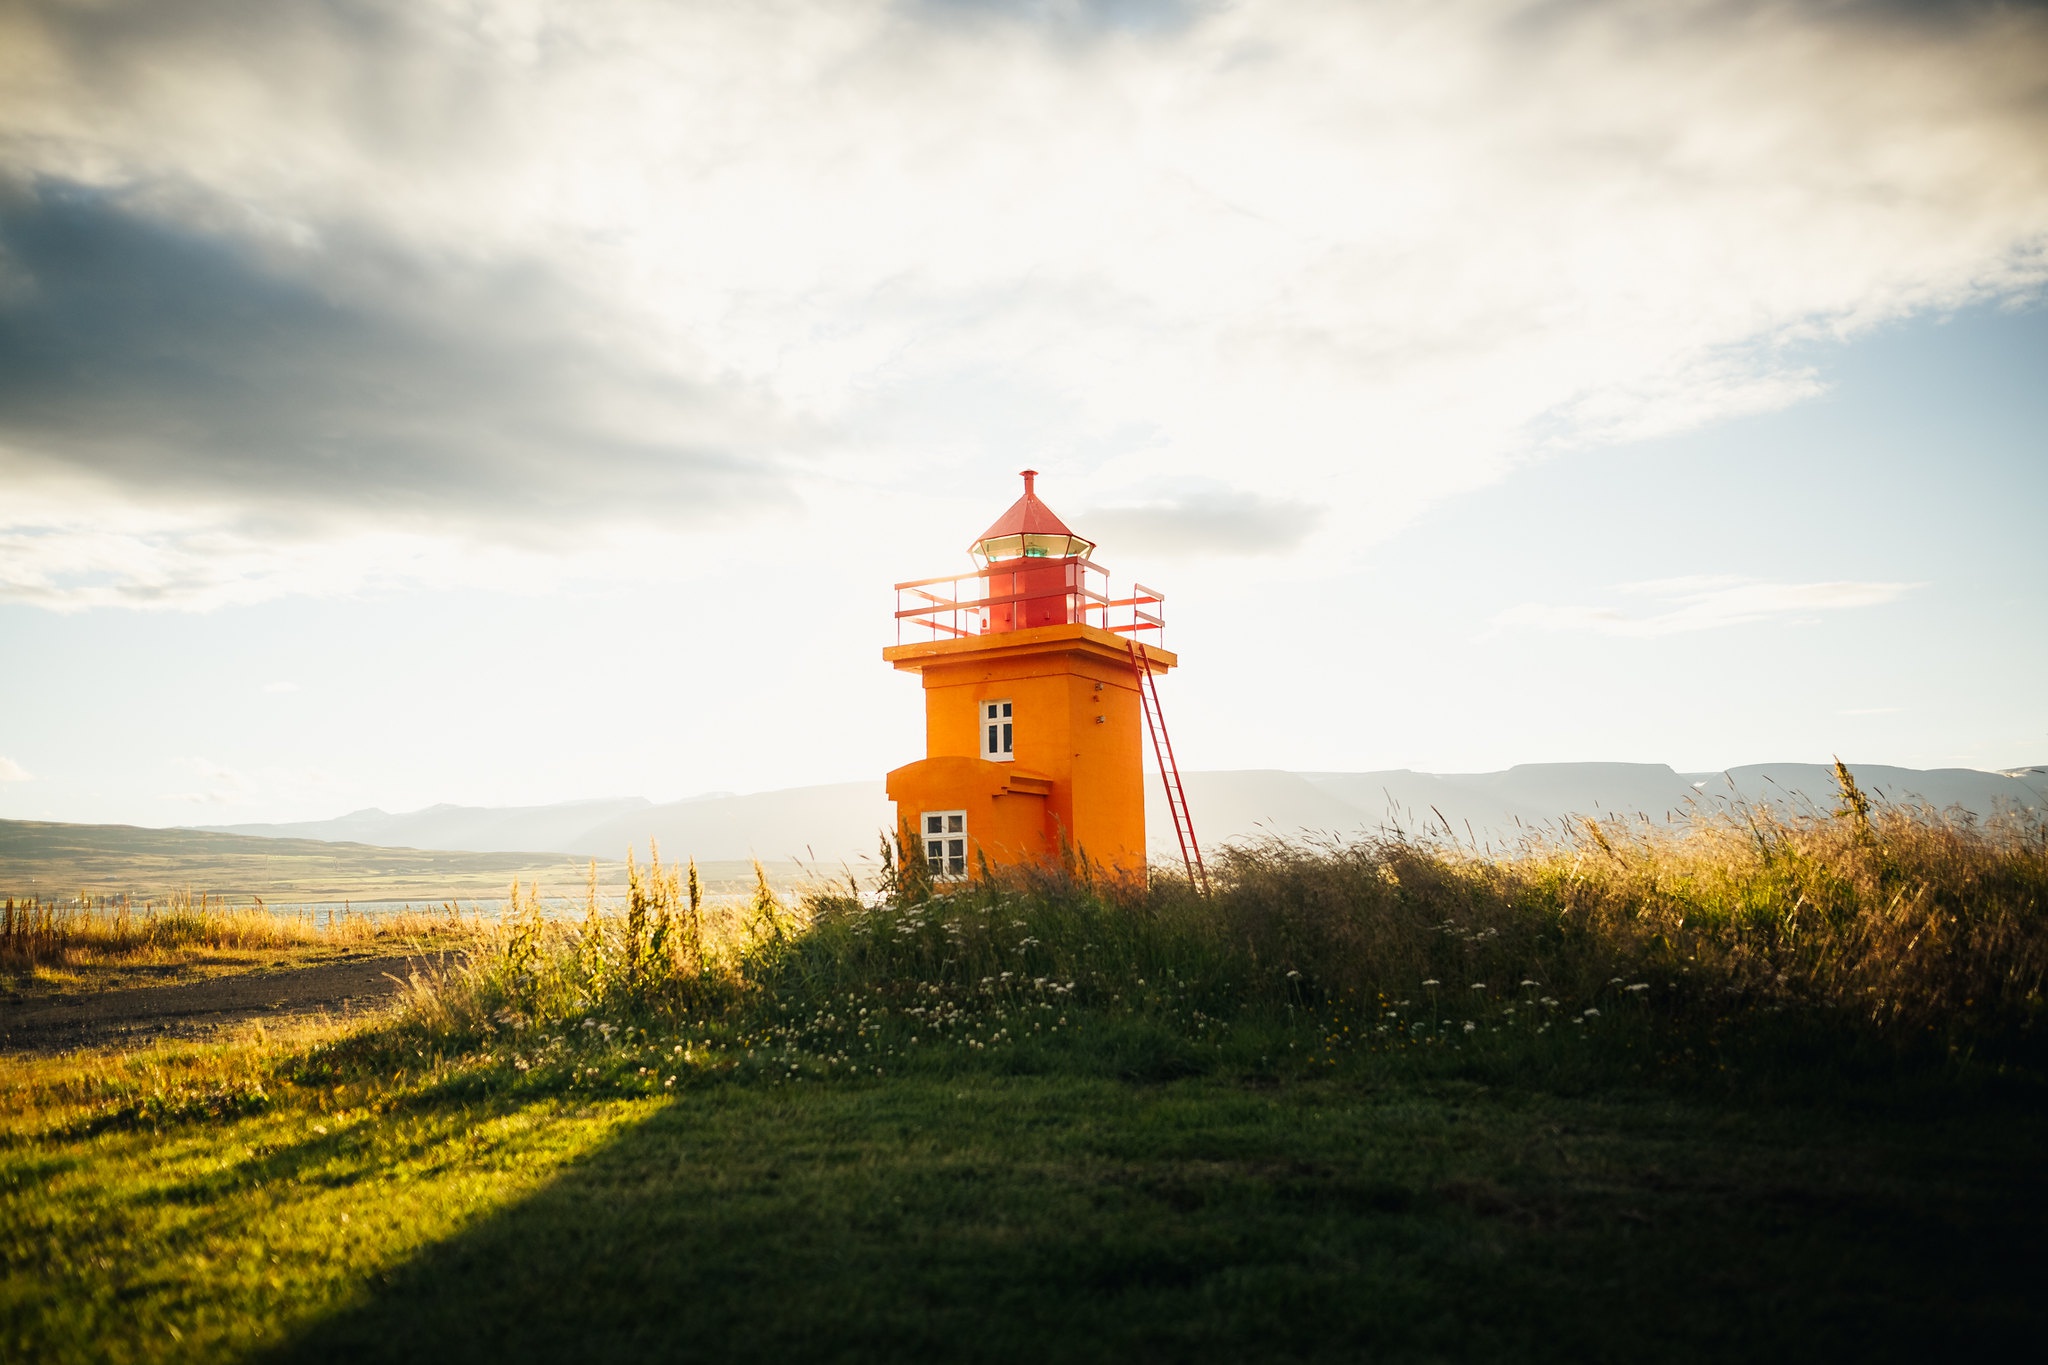 General 2048x1365 lighthouse outdoors nature orange bright sunlight grass calm